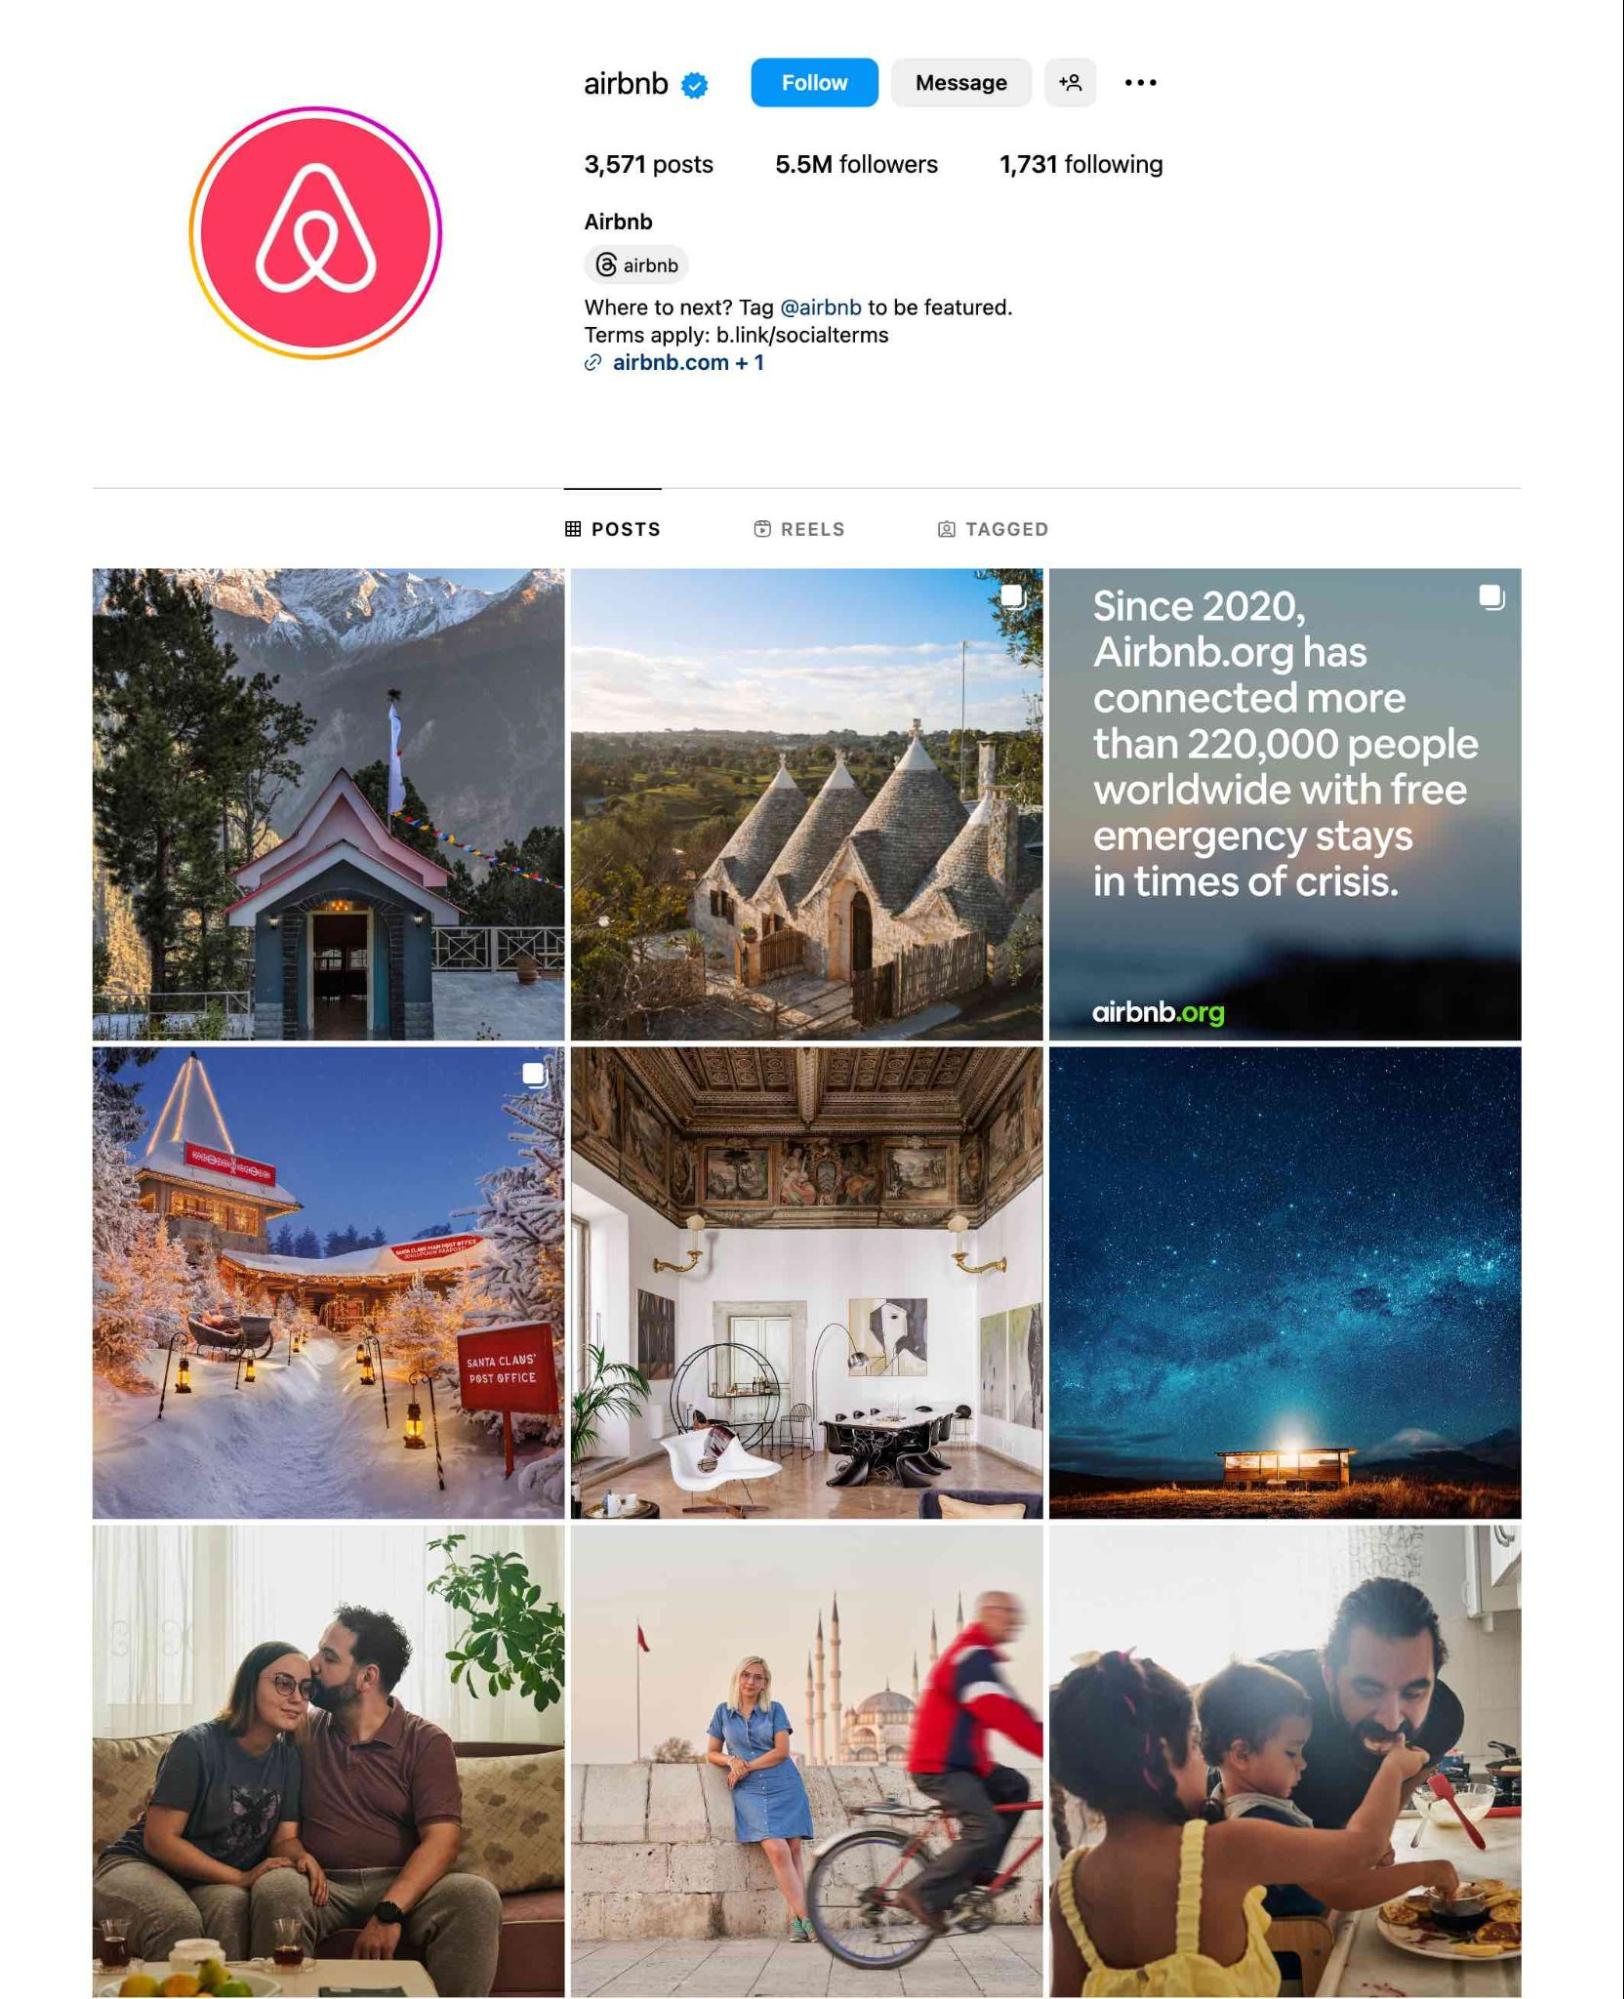 airbnb Instagram account